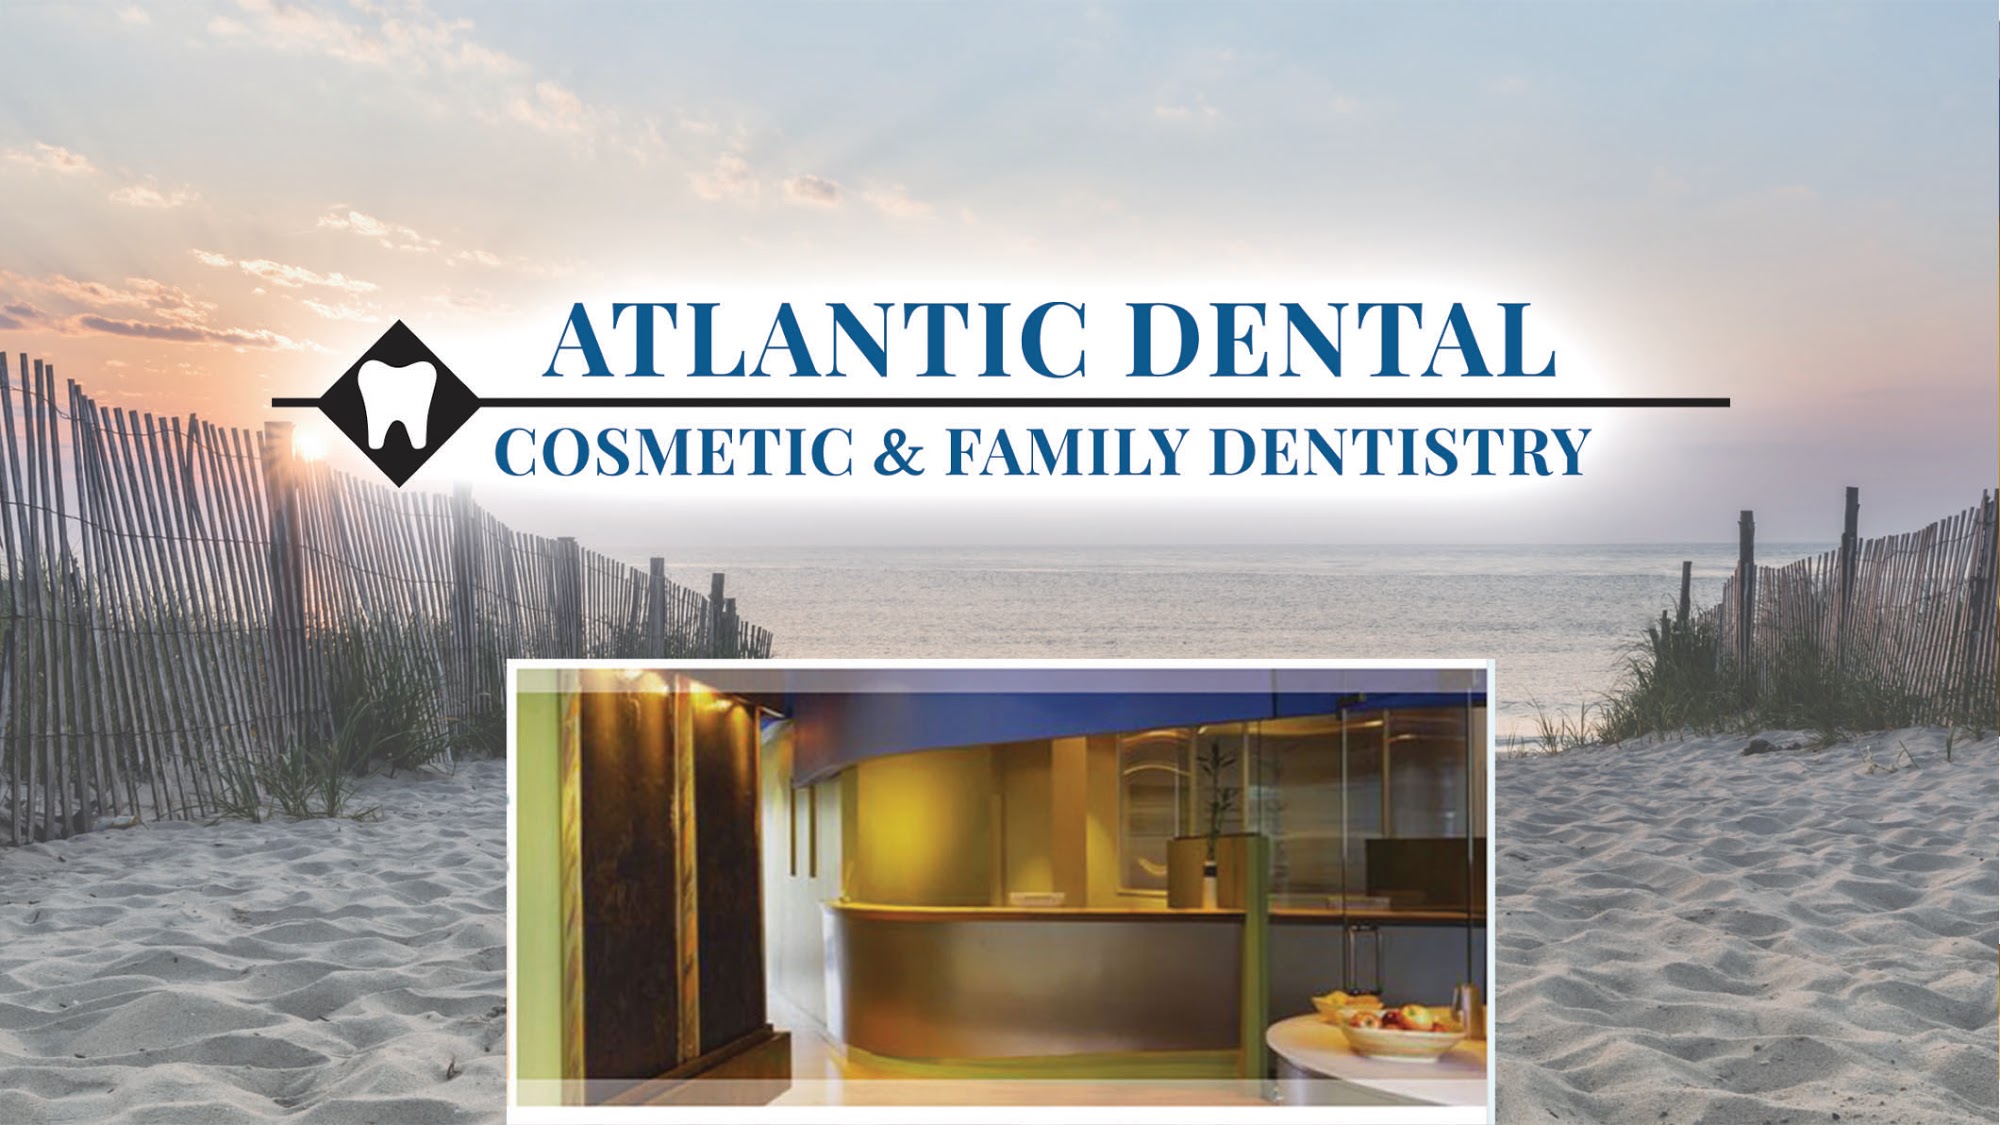 Atlantic Dental Cosmetic & Family Dentistry